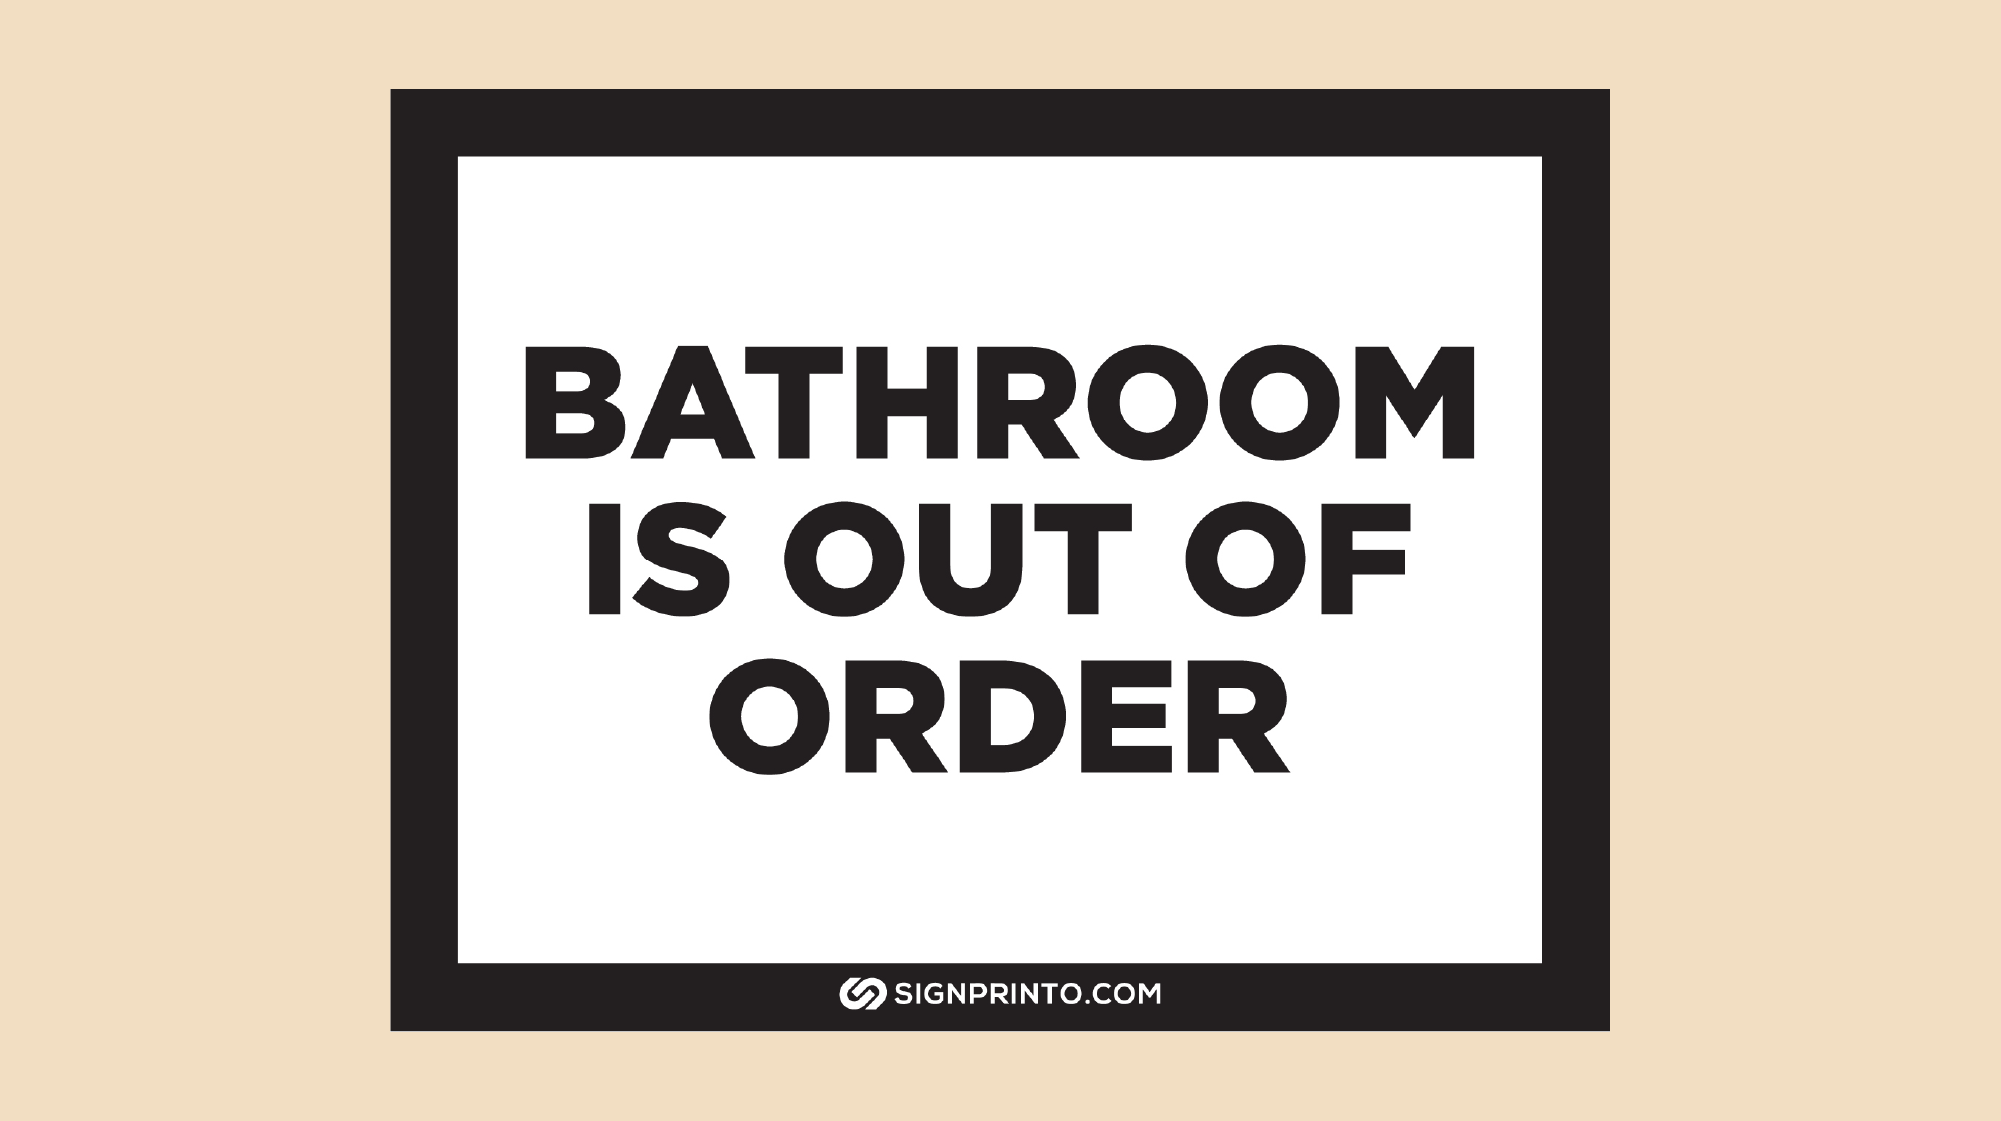 Bathroom Out of Order Sign black color 